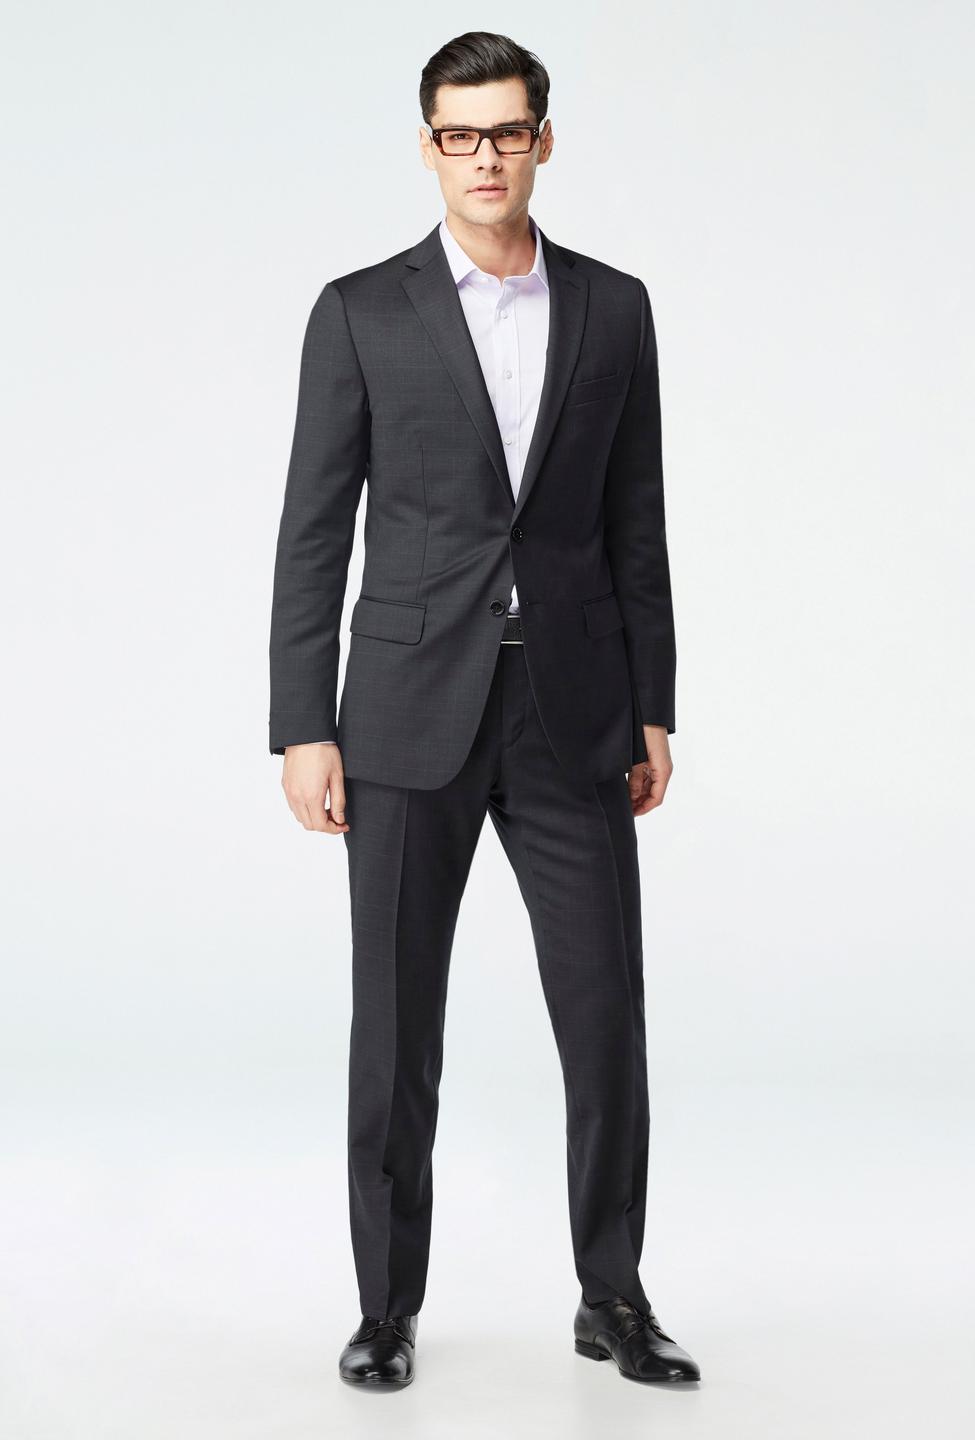 Black suit - Hemsworth Plaid Design from Premium Indochino Collection